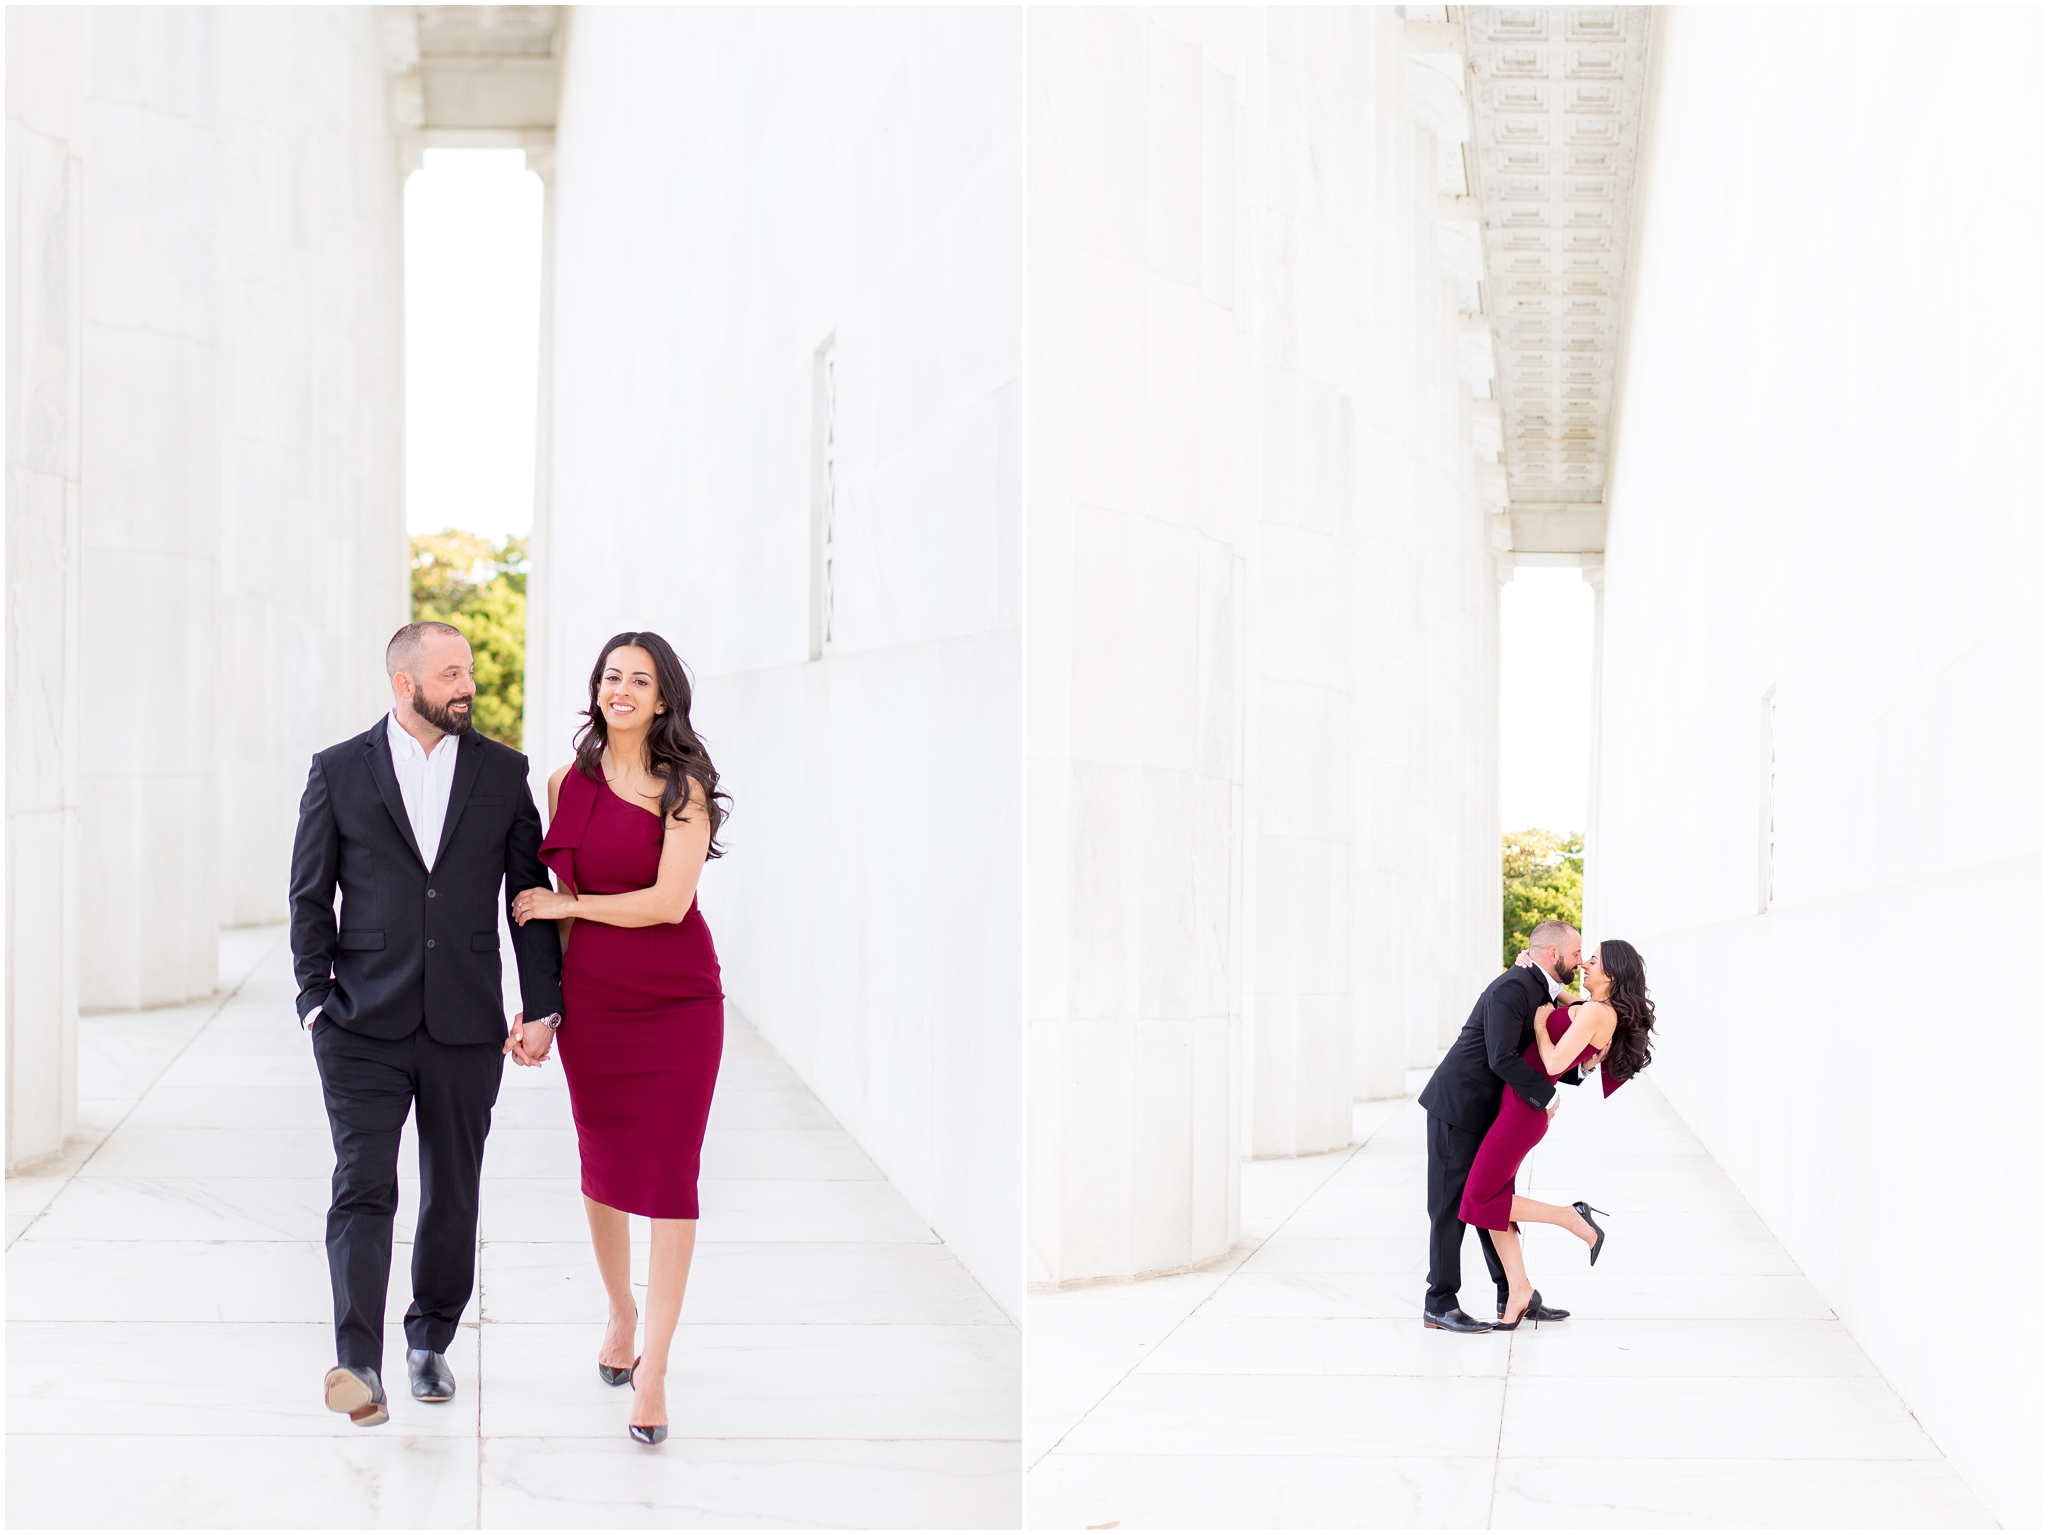 Lincoln Memorial engagement photos in Washington DC